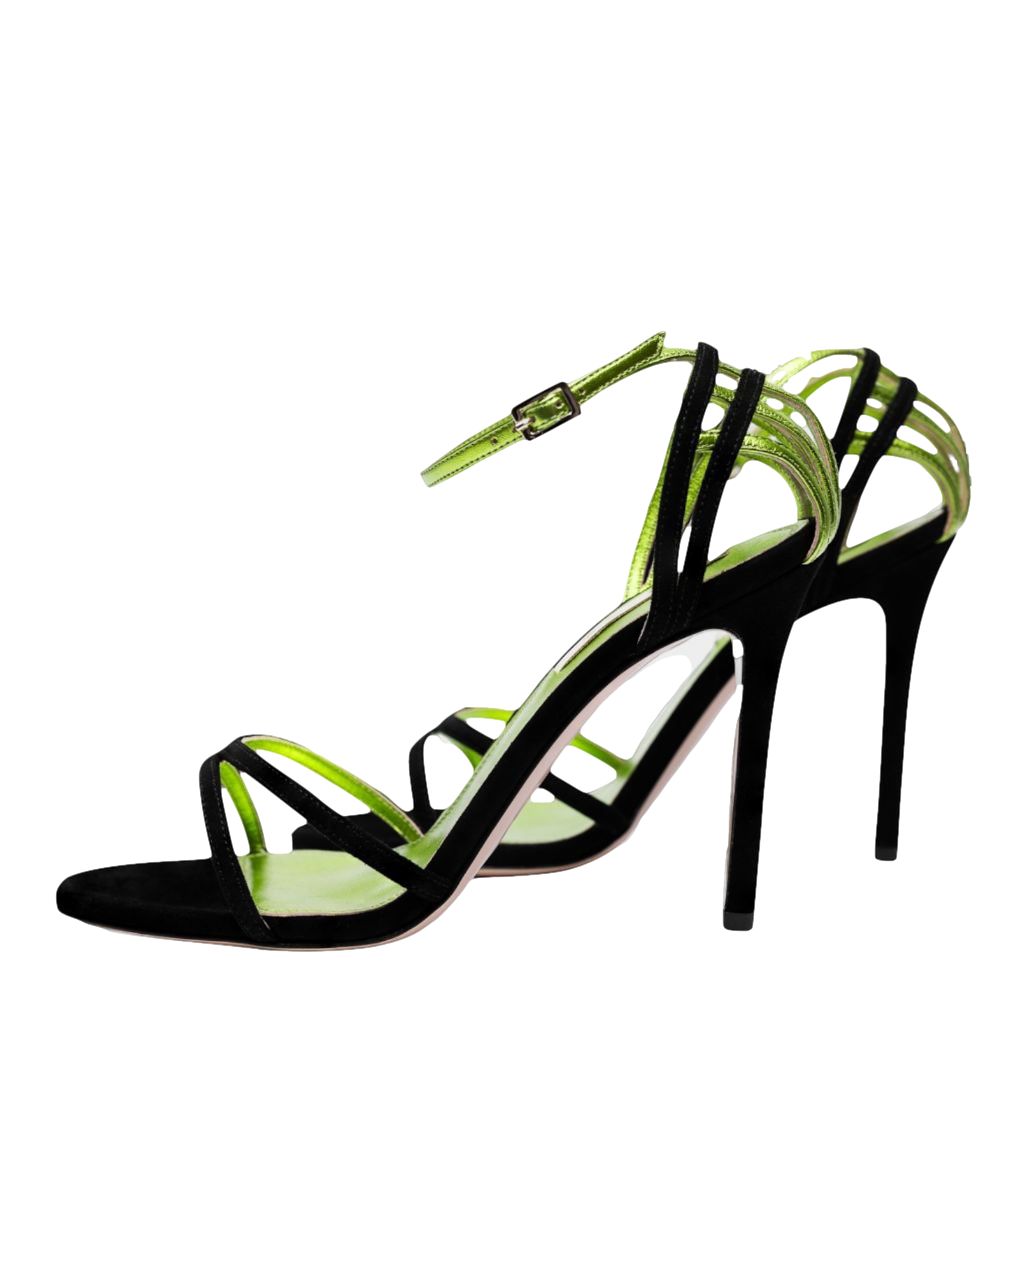 Ashley 100mm Sandals Black / Green Metallic | Seezona